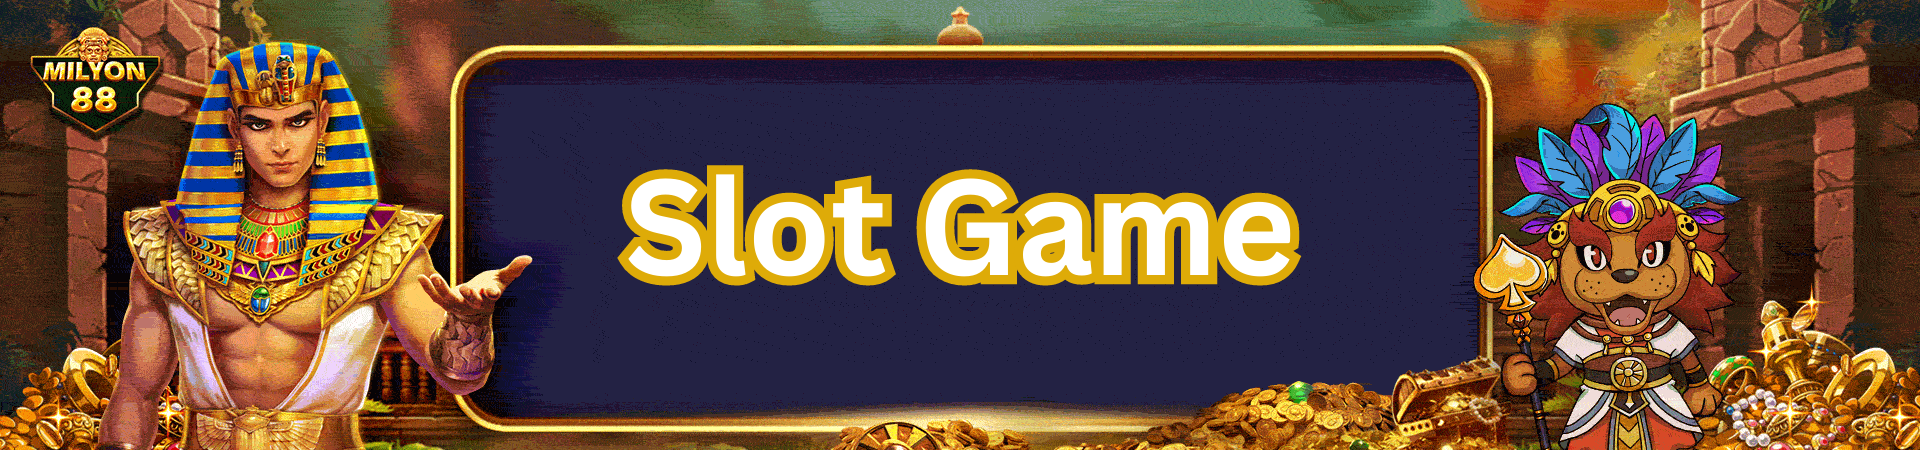 Milyon88 - Slot Game - milyon88a.com